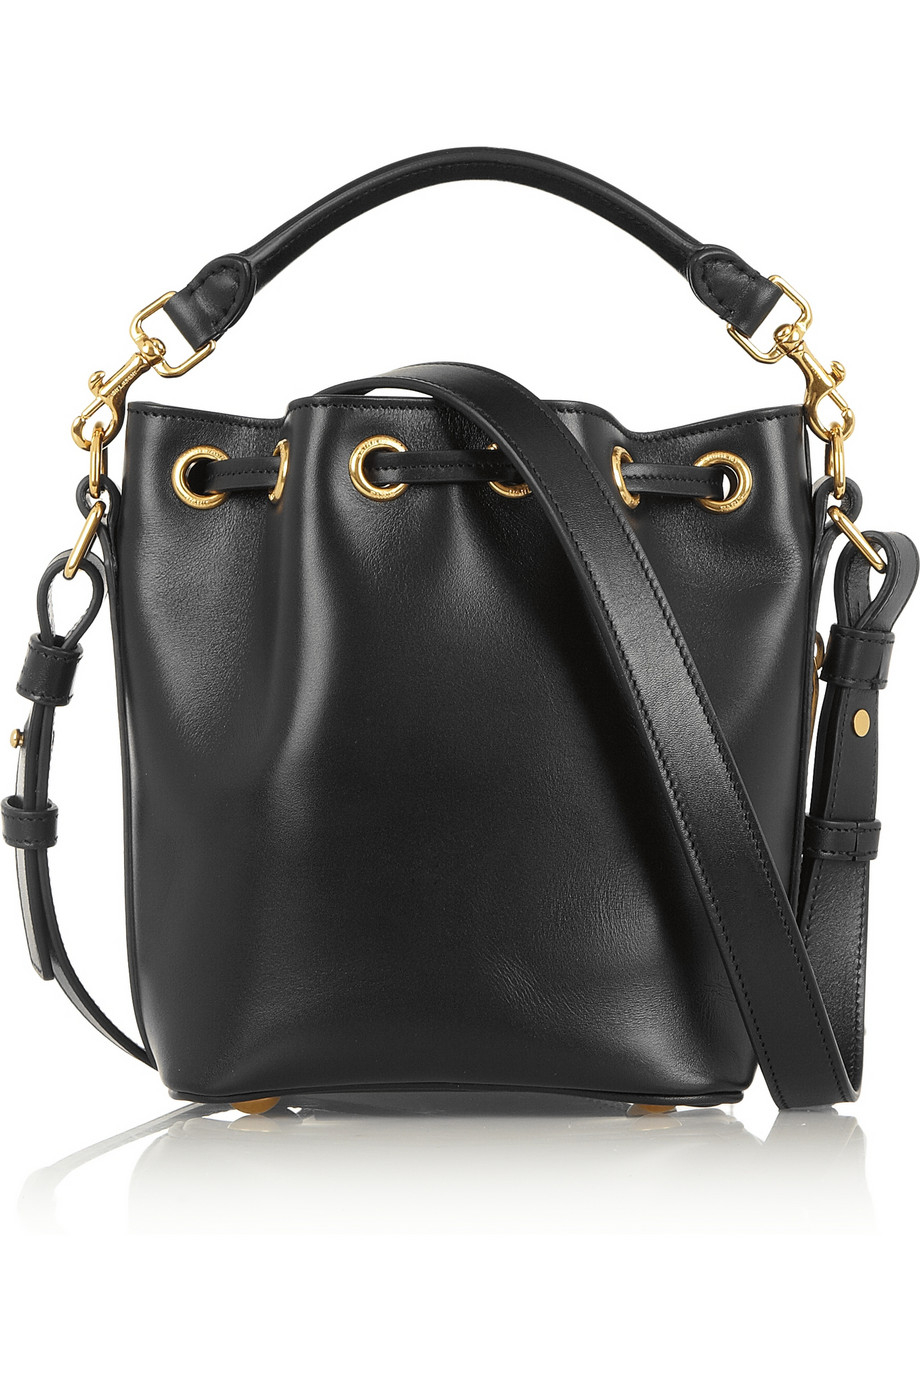 Lyst - Saint Laurent Emmanuelle Small Leather Bucket Bag in Black